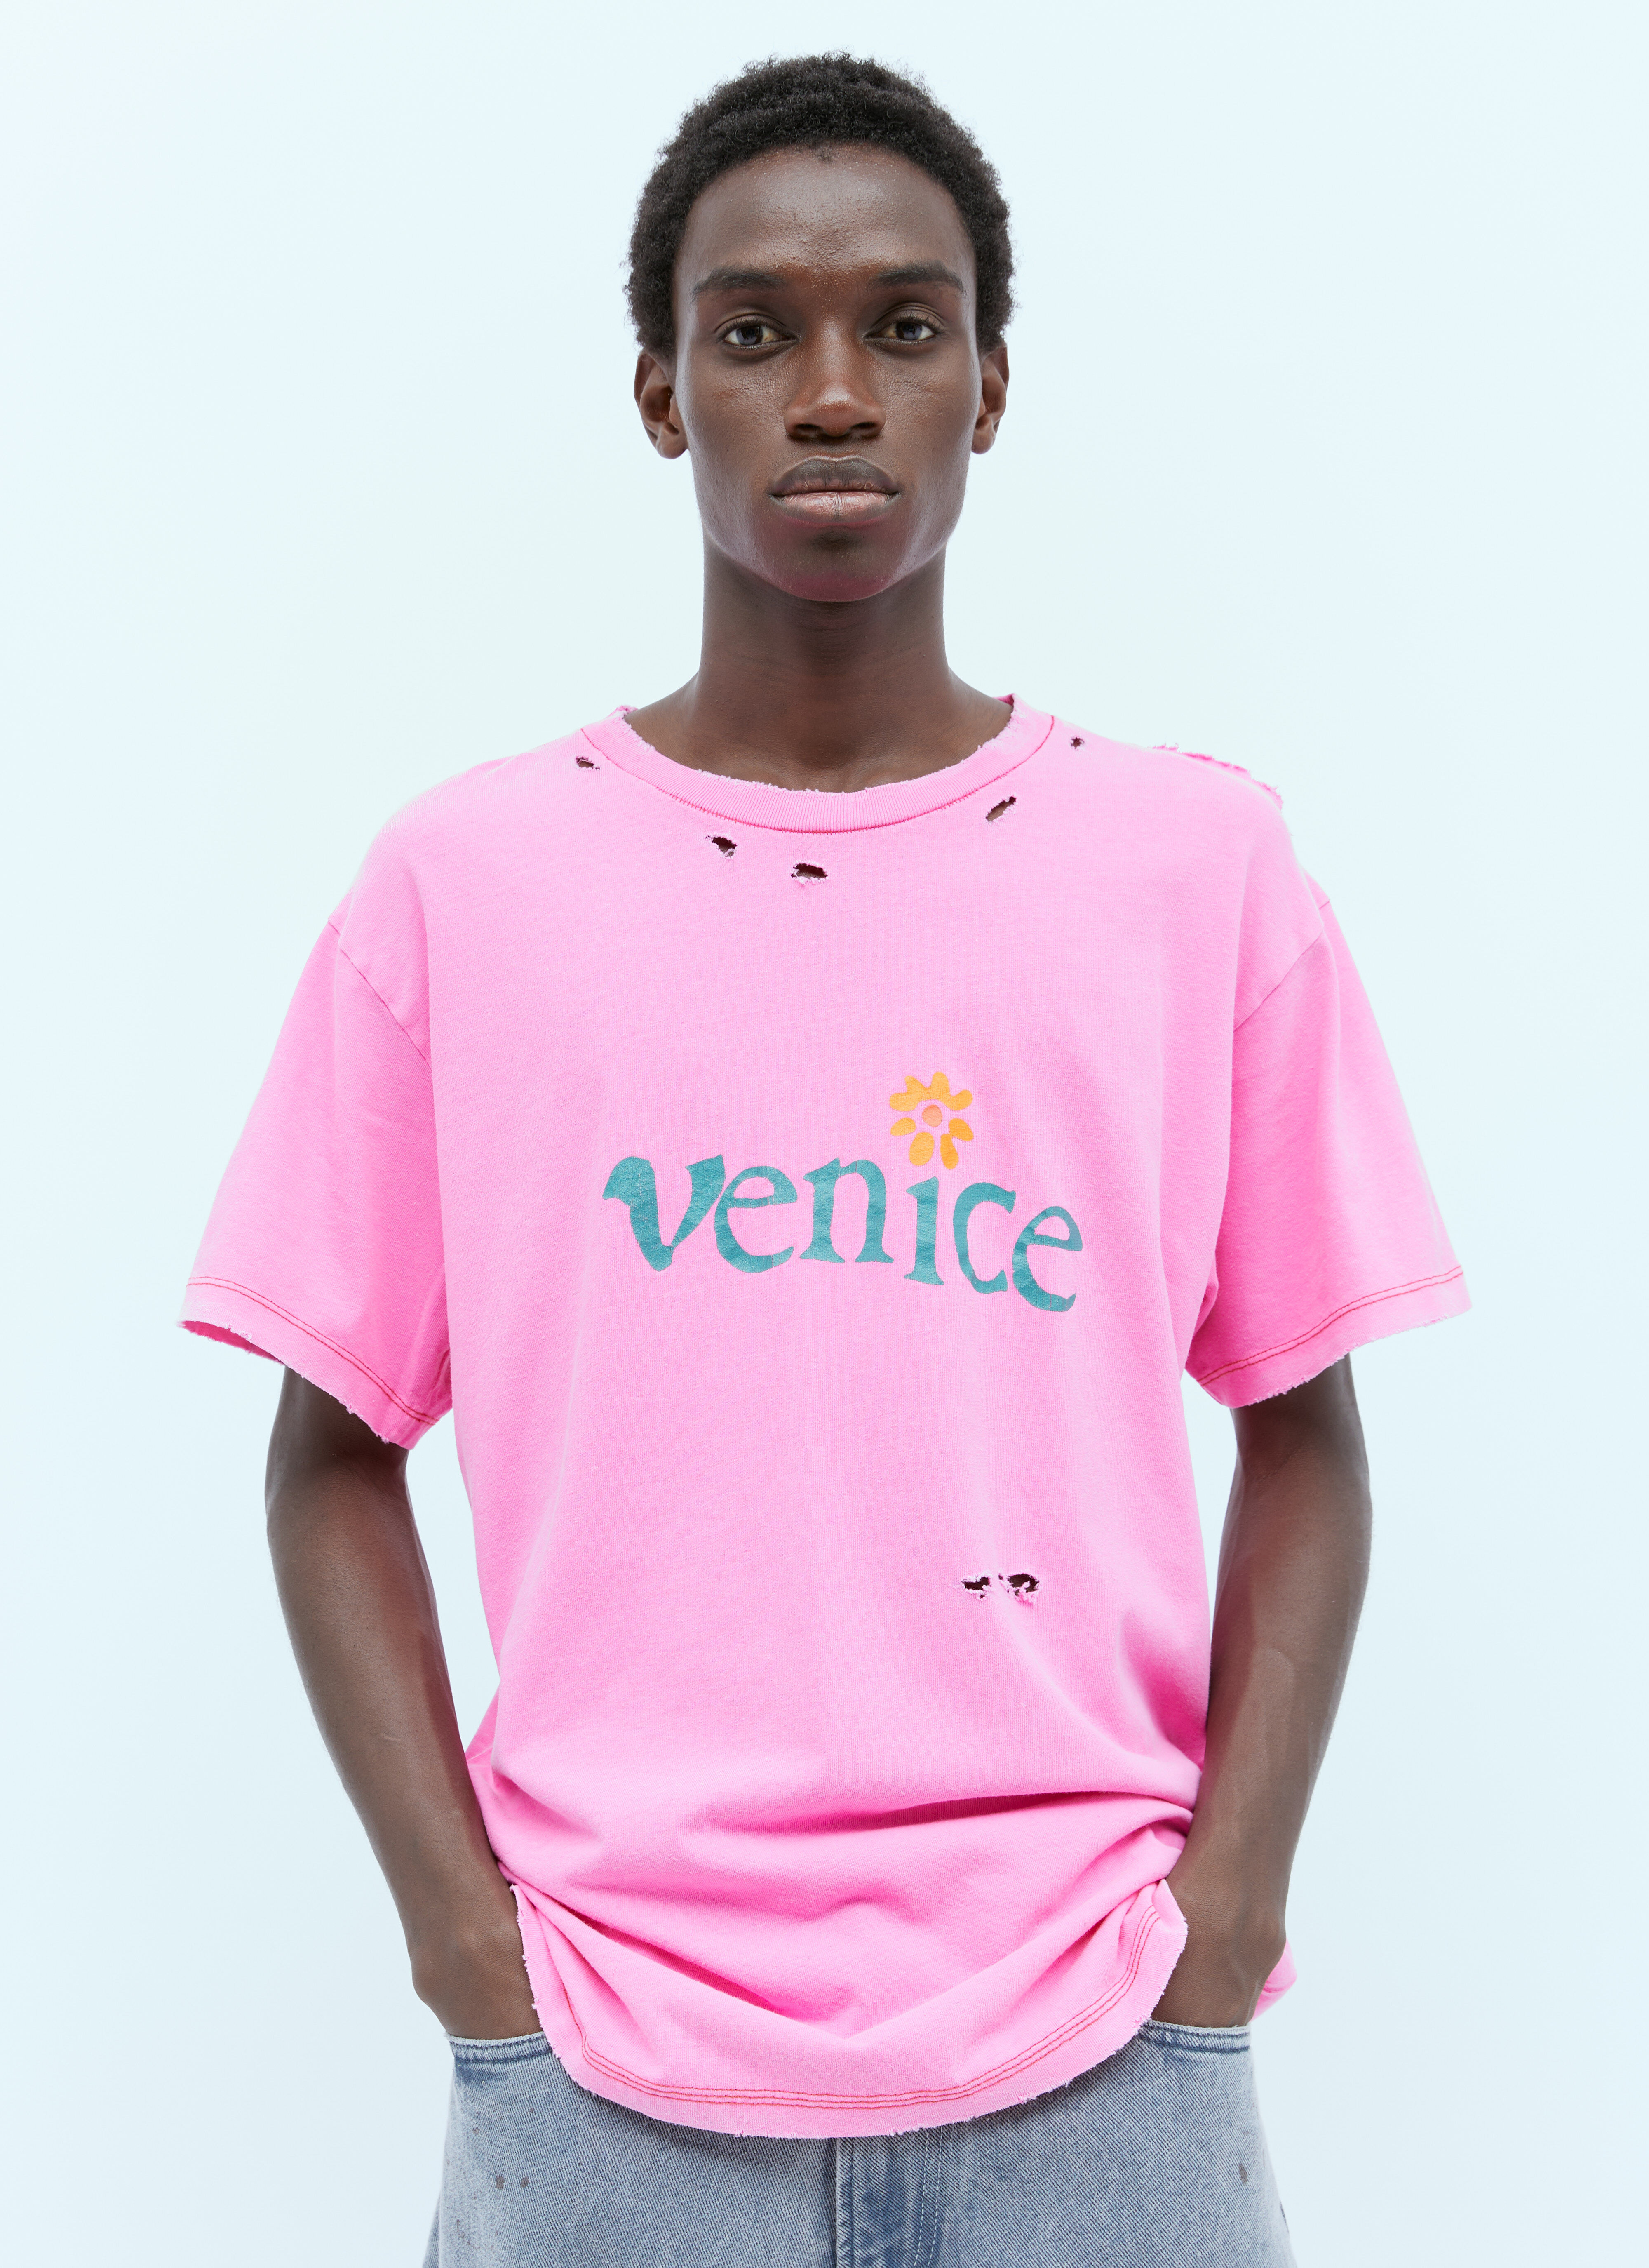 ERL Venice T-Shirt Black erl0156018